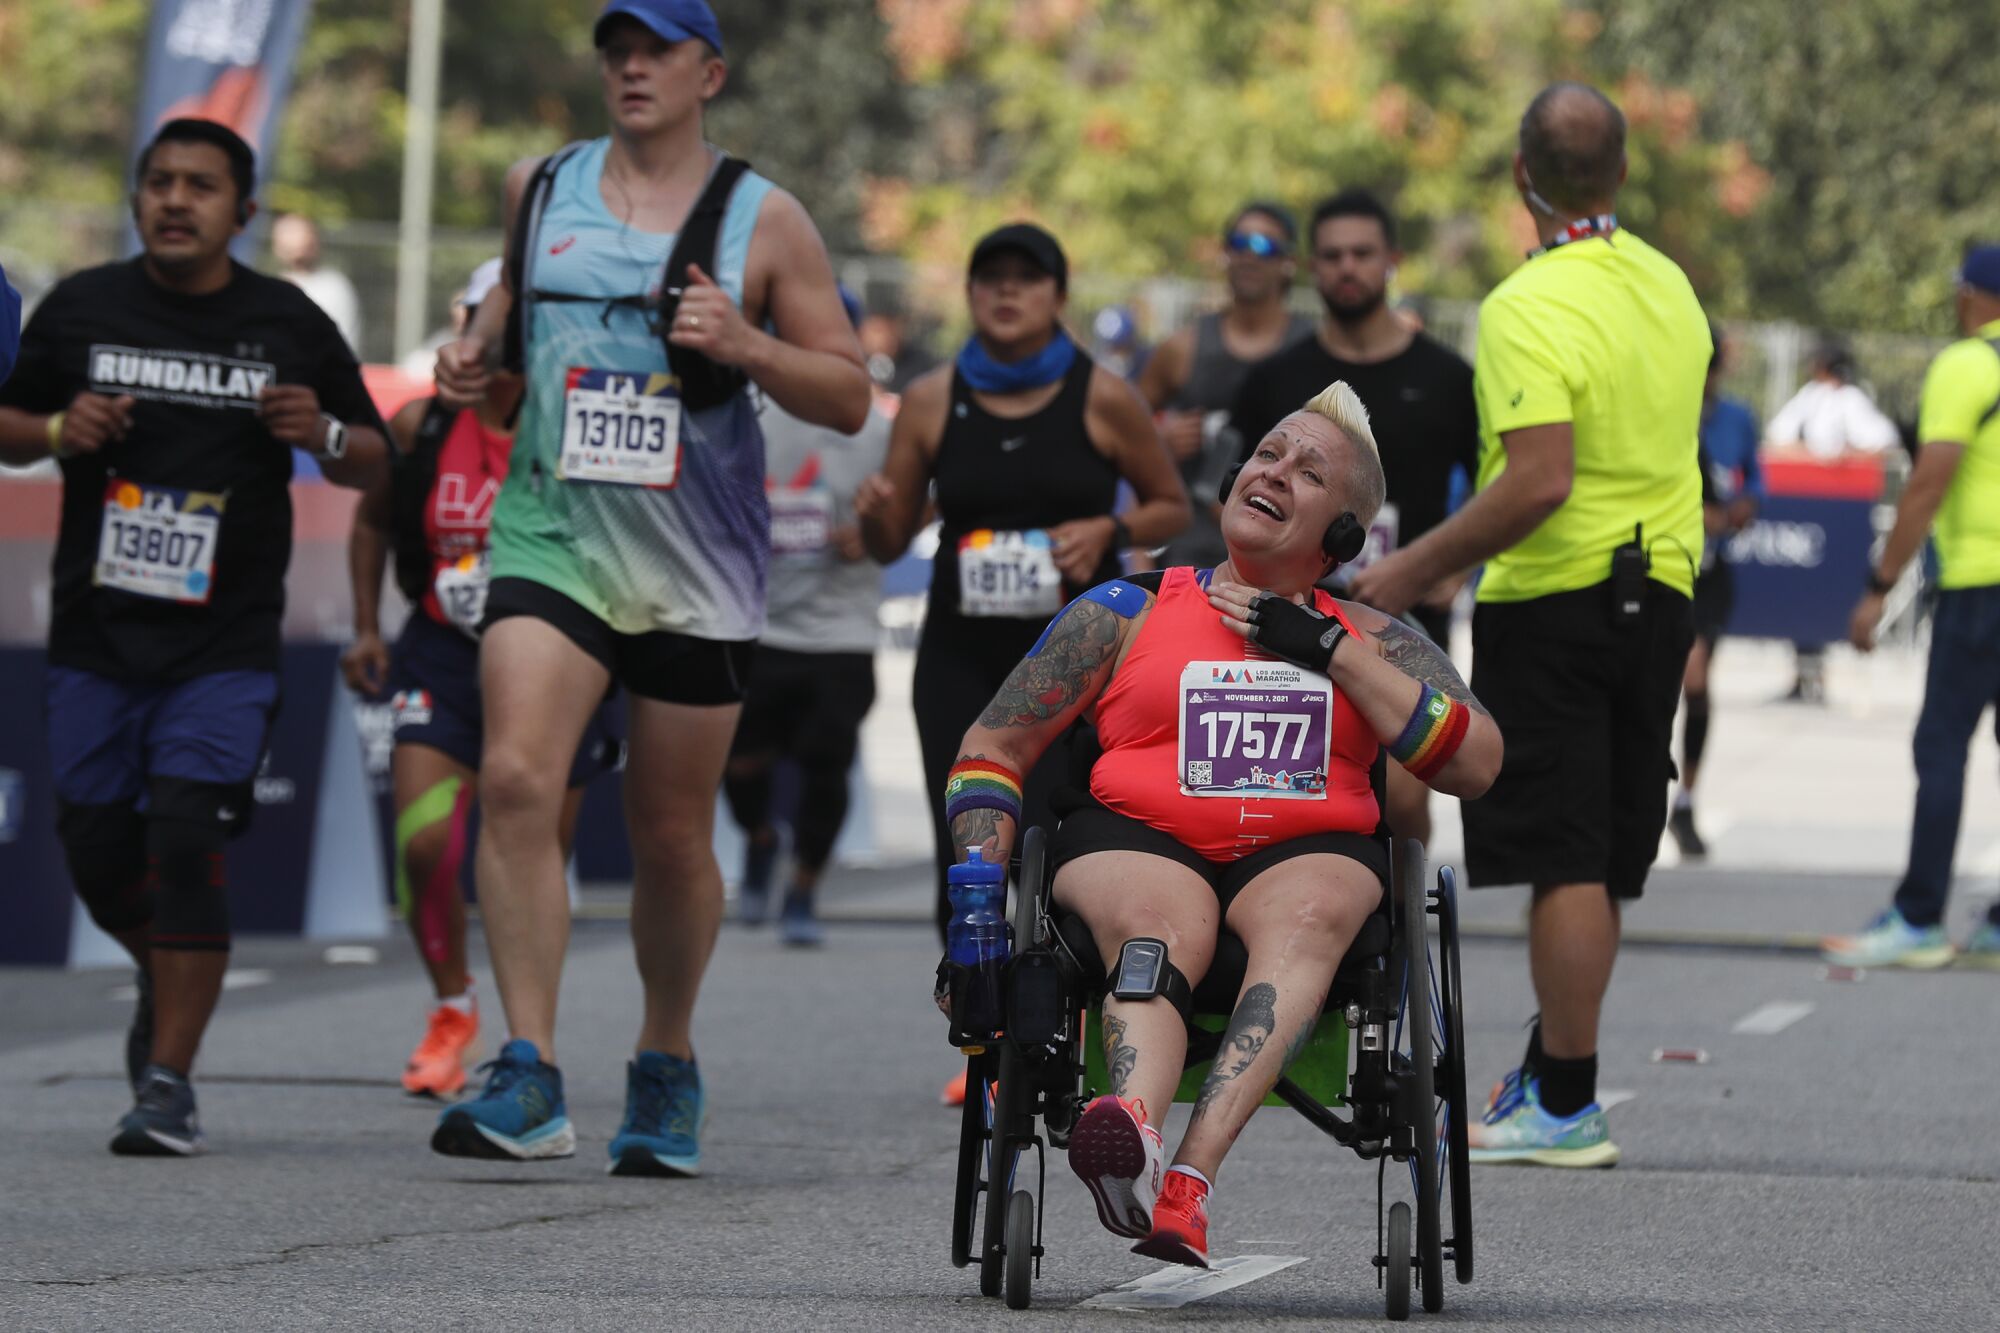  Jani Barr of Canada finishes the Los Angeles Marathon